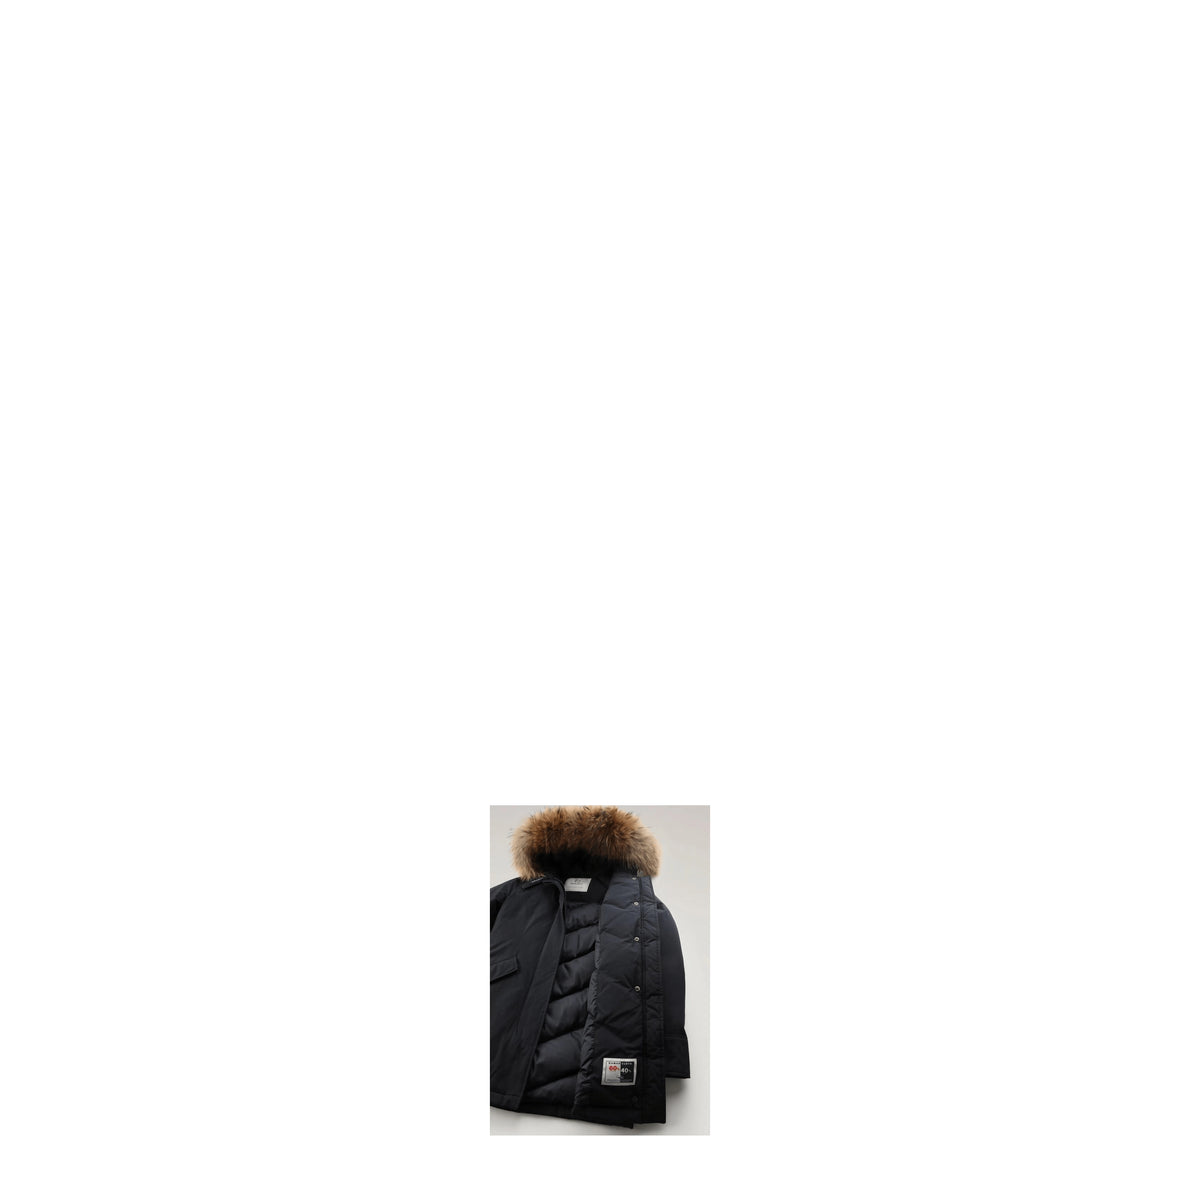 Woolrich Idee Regalo Jacket artic parka Donna Cotone Blu Navy Scuro